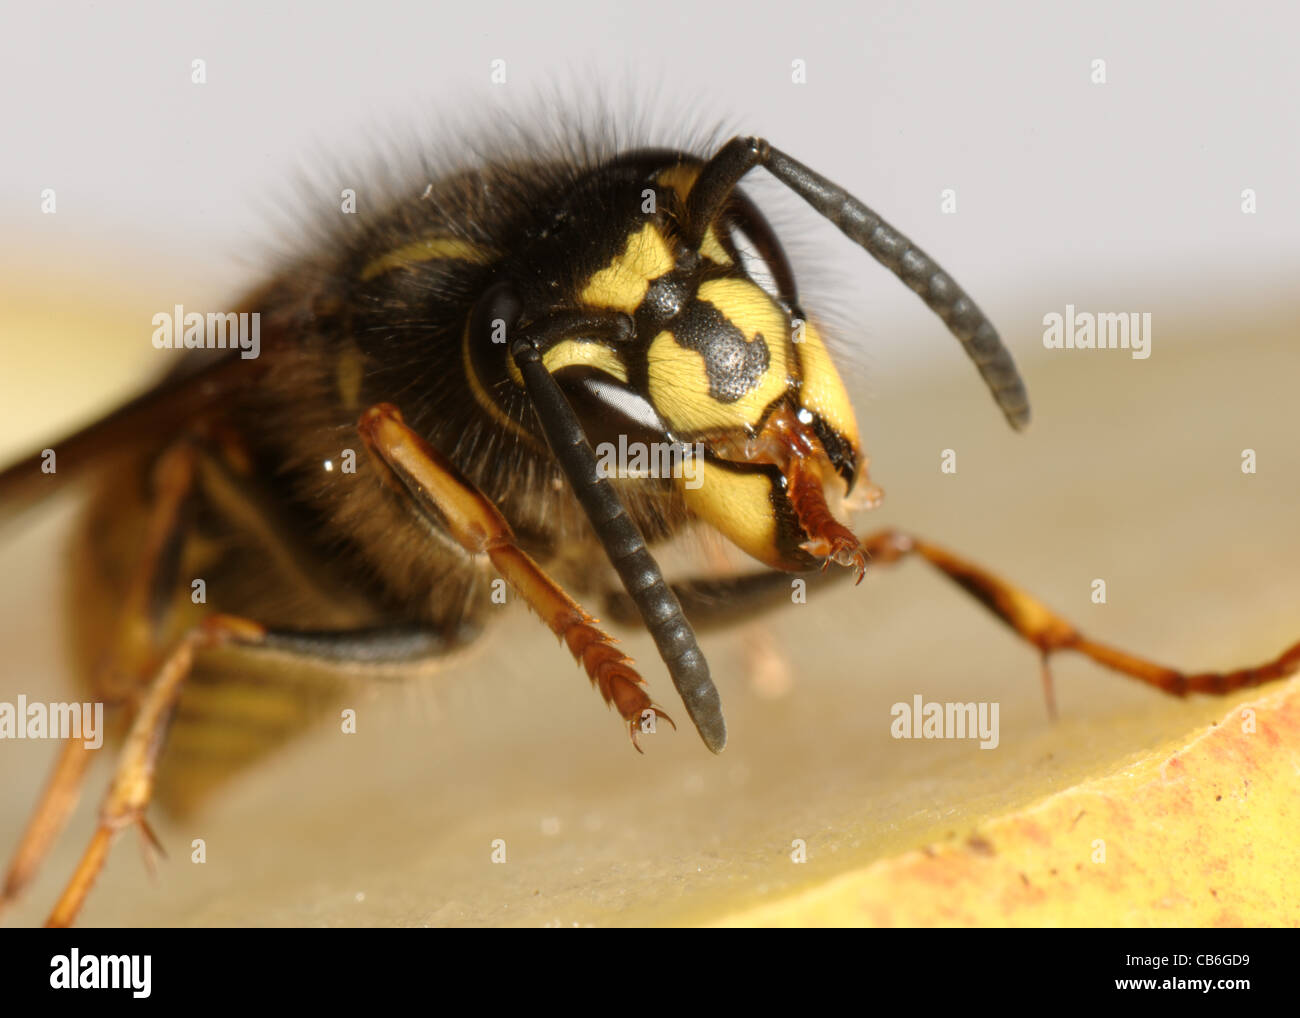 Wasp (Vespula vulgaris) on an apple cleaning its mandibles Stock Photo